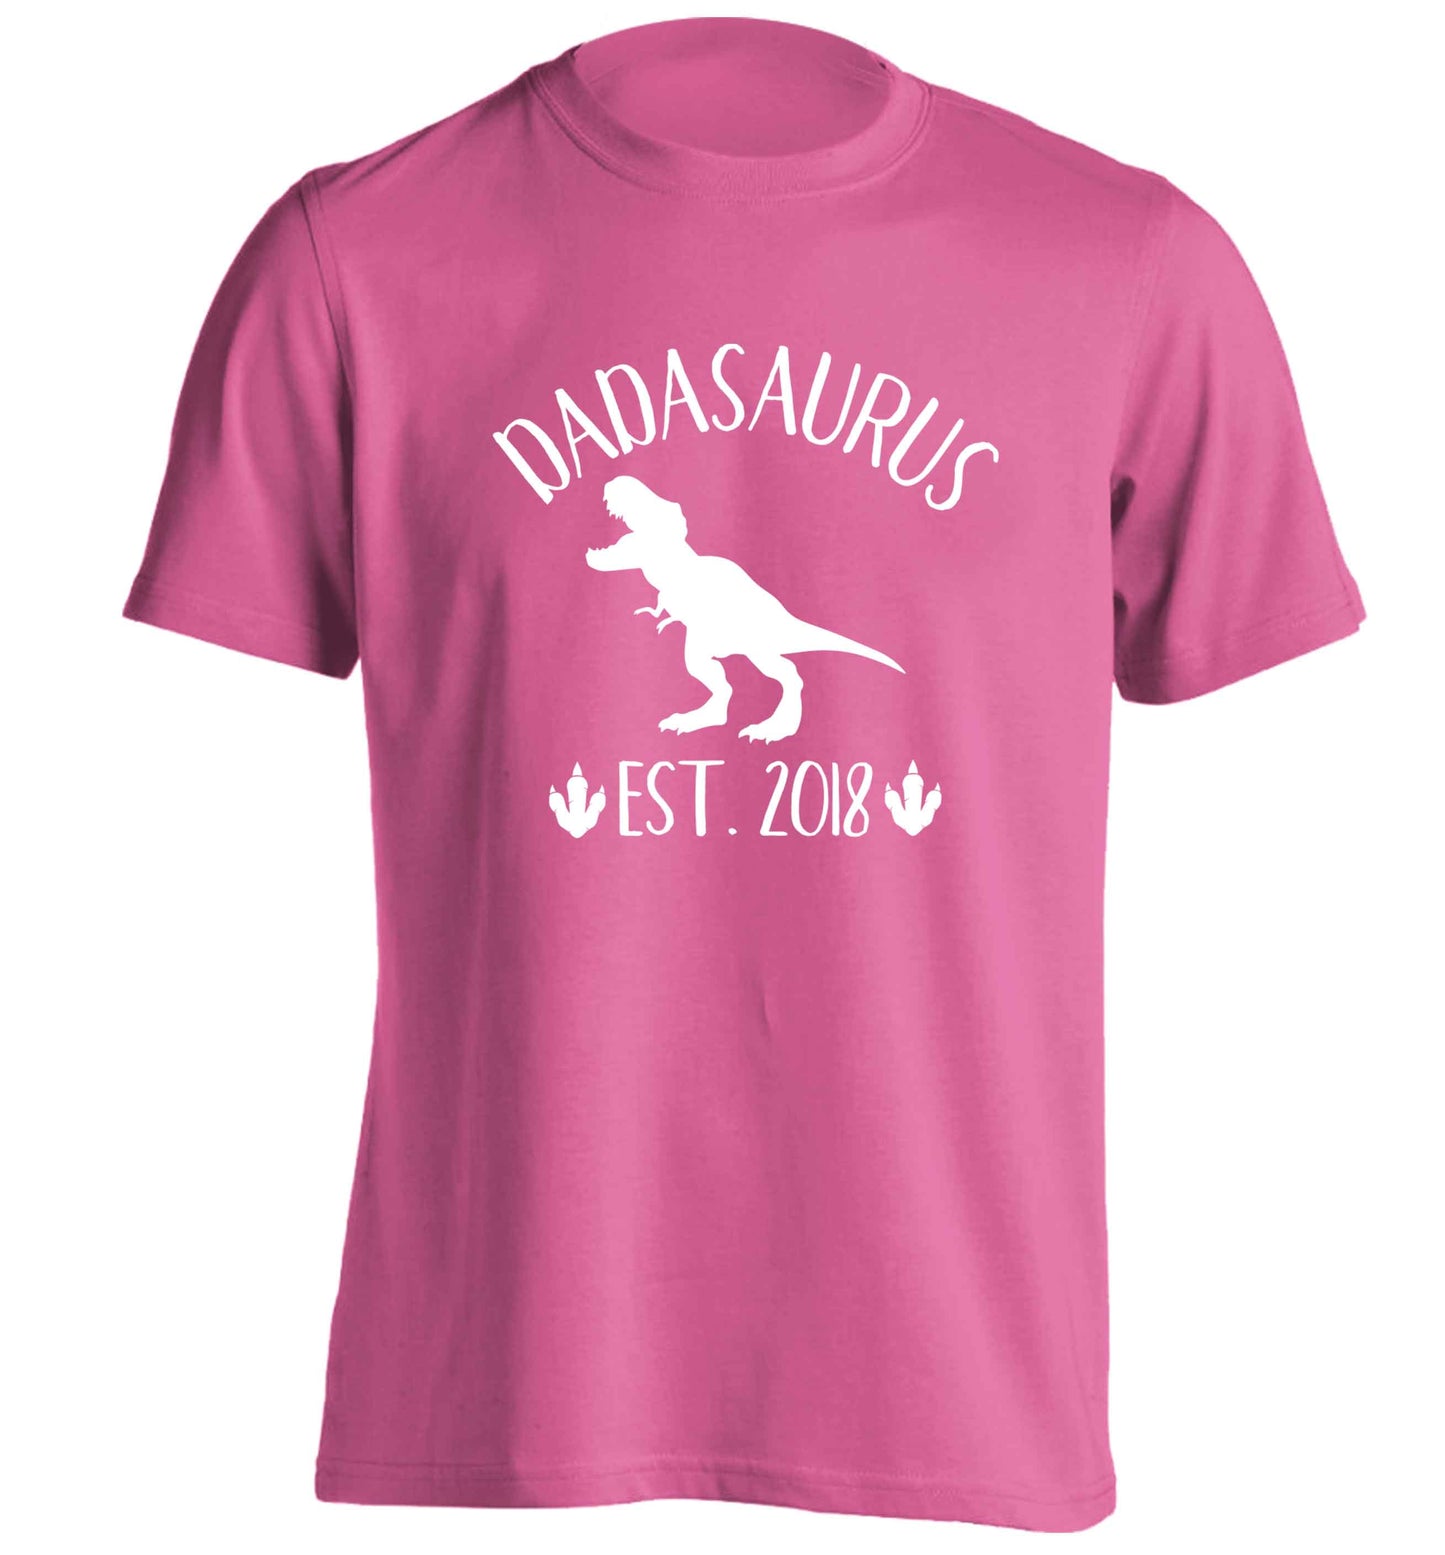 Personalised dadasaurus since (custom date) adults unisex pink Tshirt 2XL